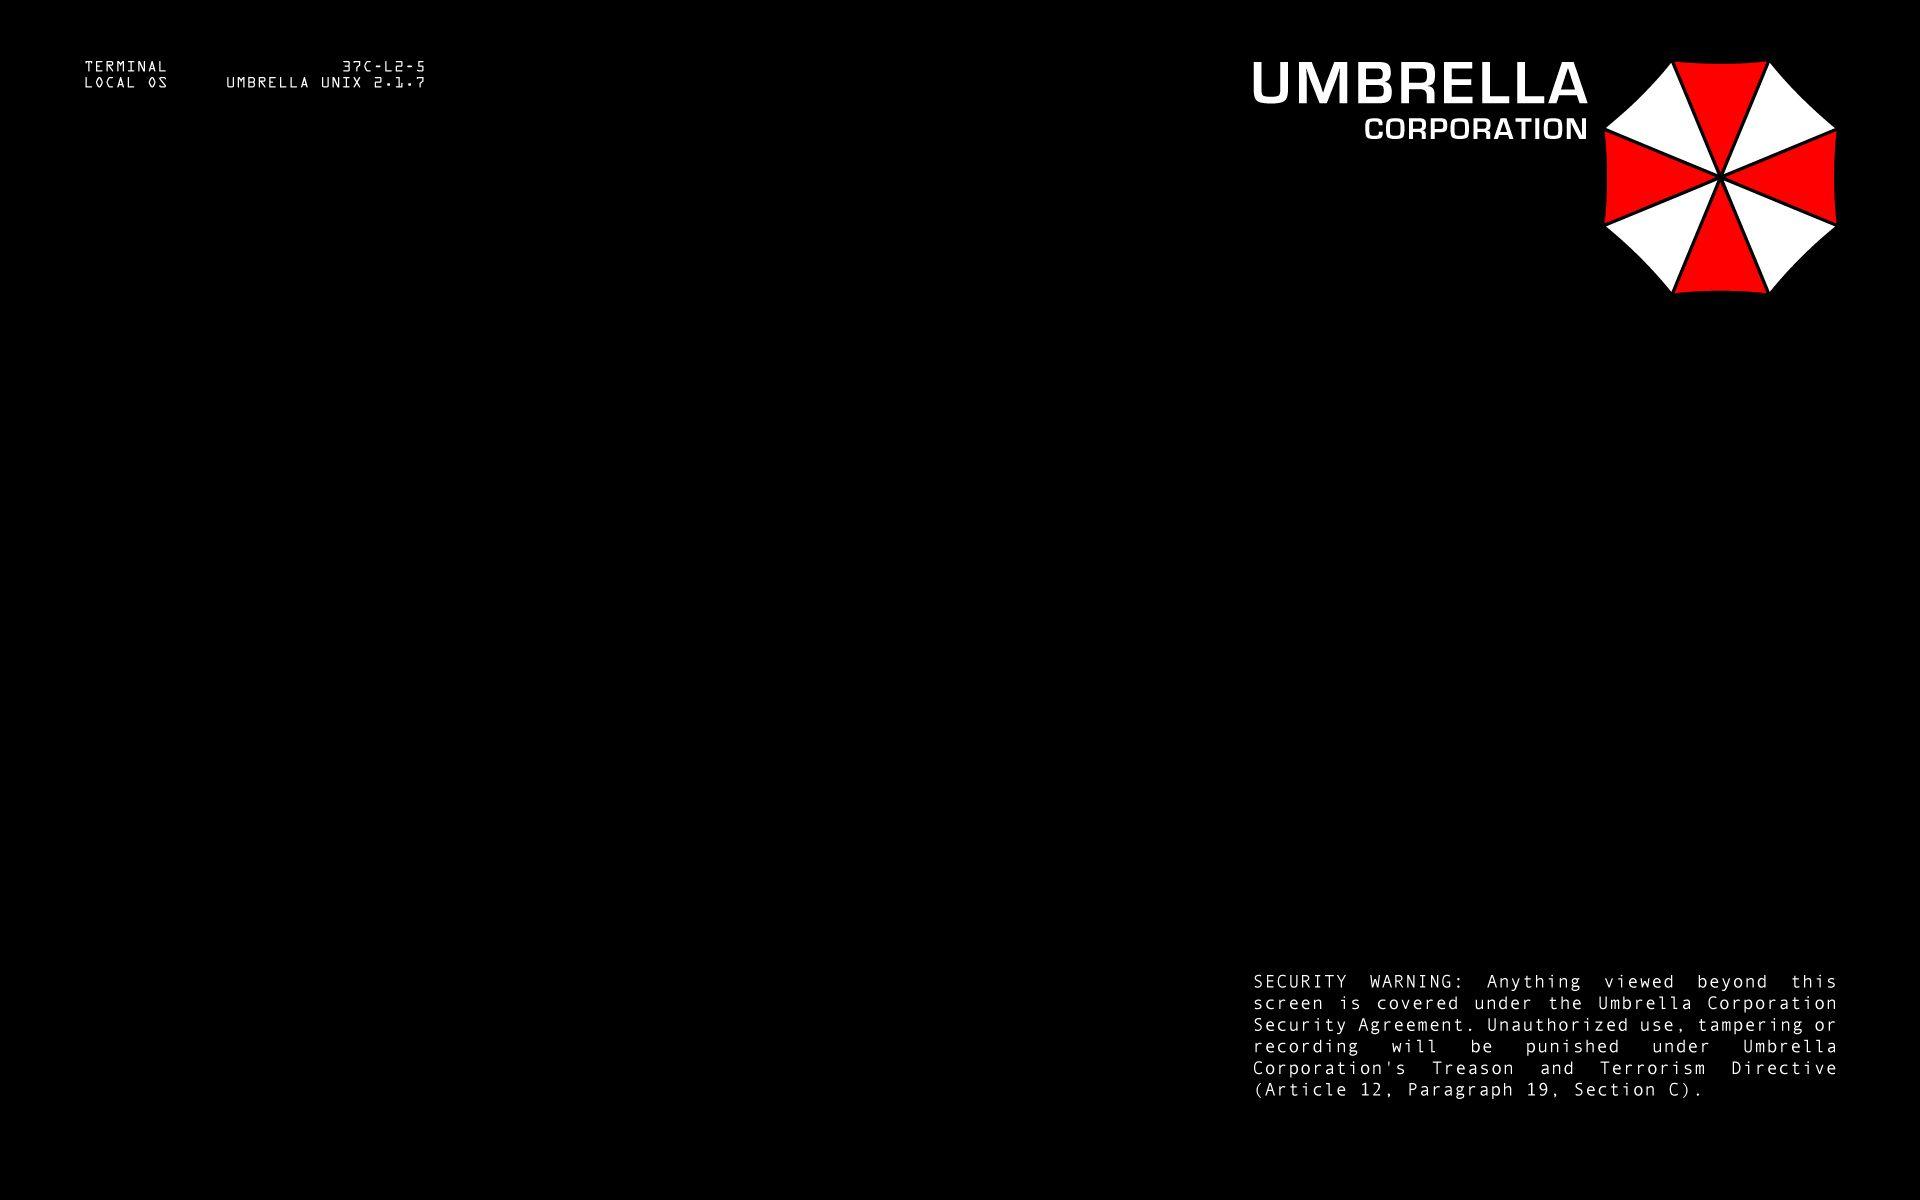 Umbrella Corporation wallpapers : Desktop and mobile wallpapers